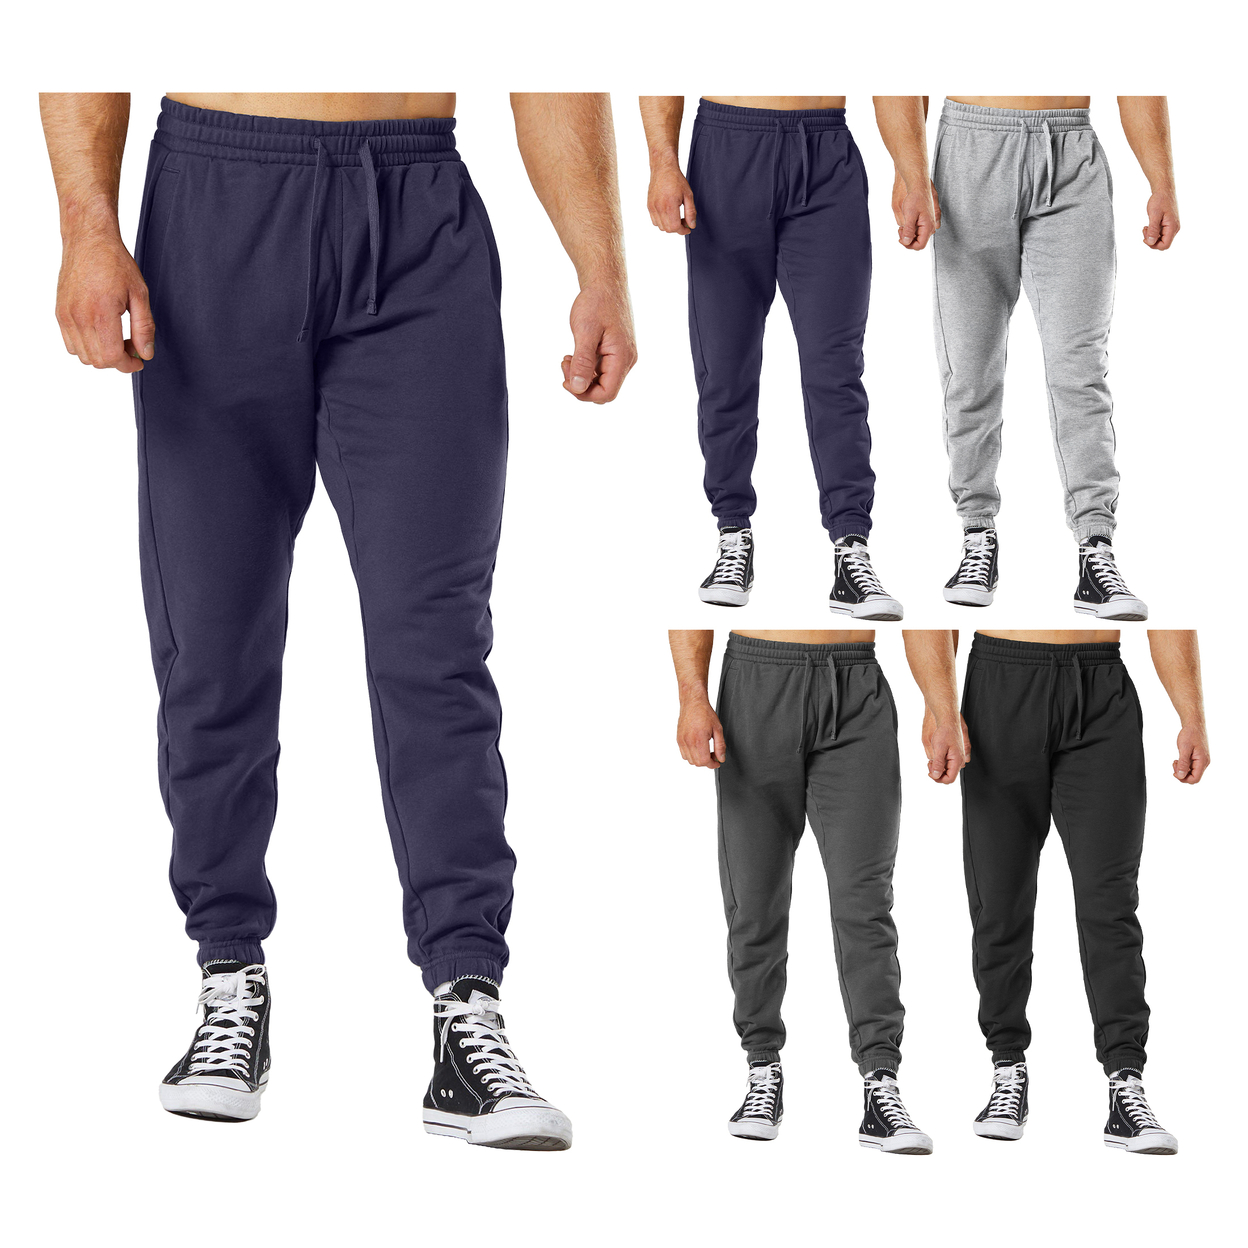 2-Pack: Men's Ultra-Soft Cozy Winter Warm Casual Fleece-Lined Sweatpants Jogger - Black & Charcoal, X-large